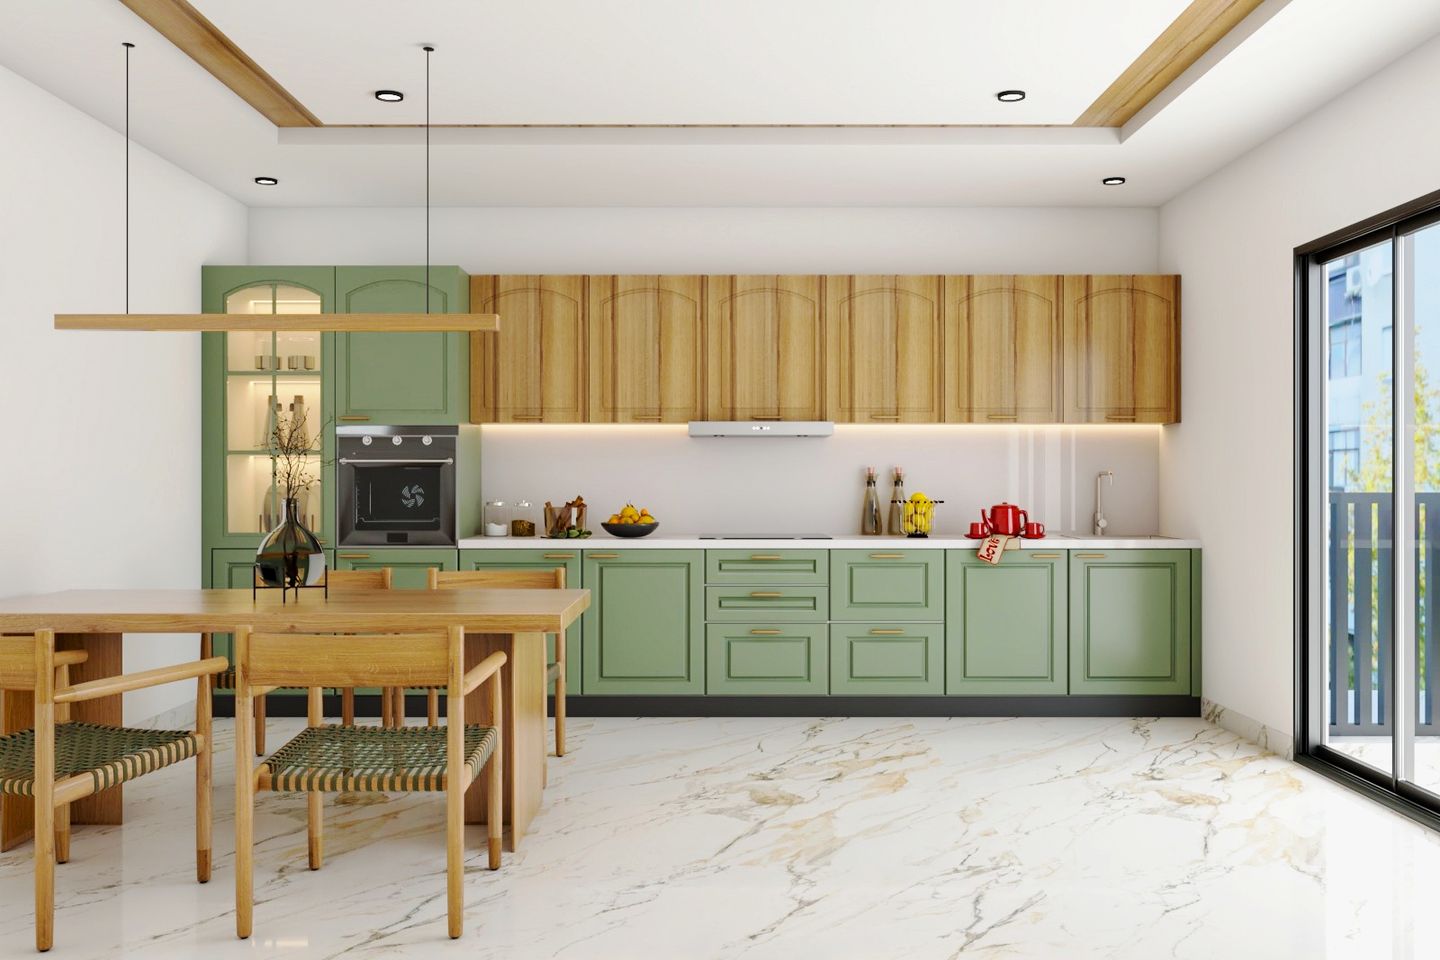 16x11 Ft Green And White Straight Modular Kitchen Design With Lacquered Backsplash - Livspace